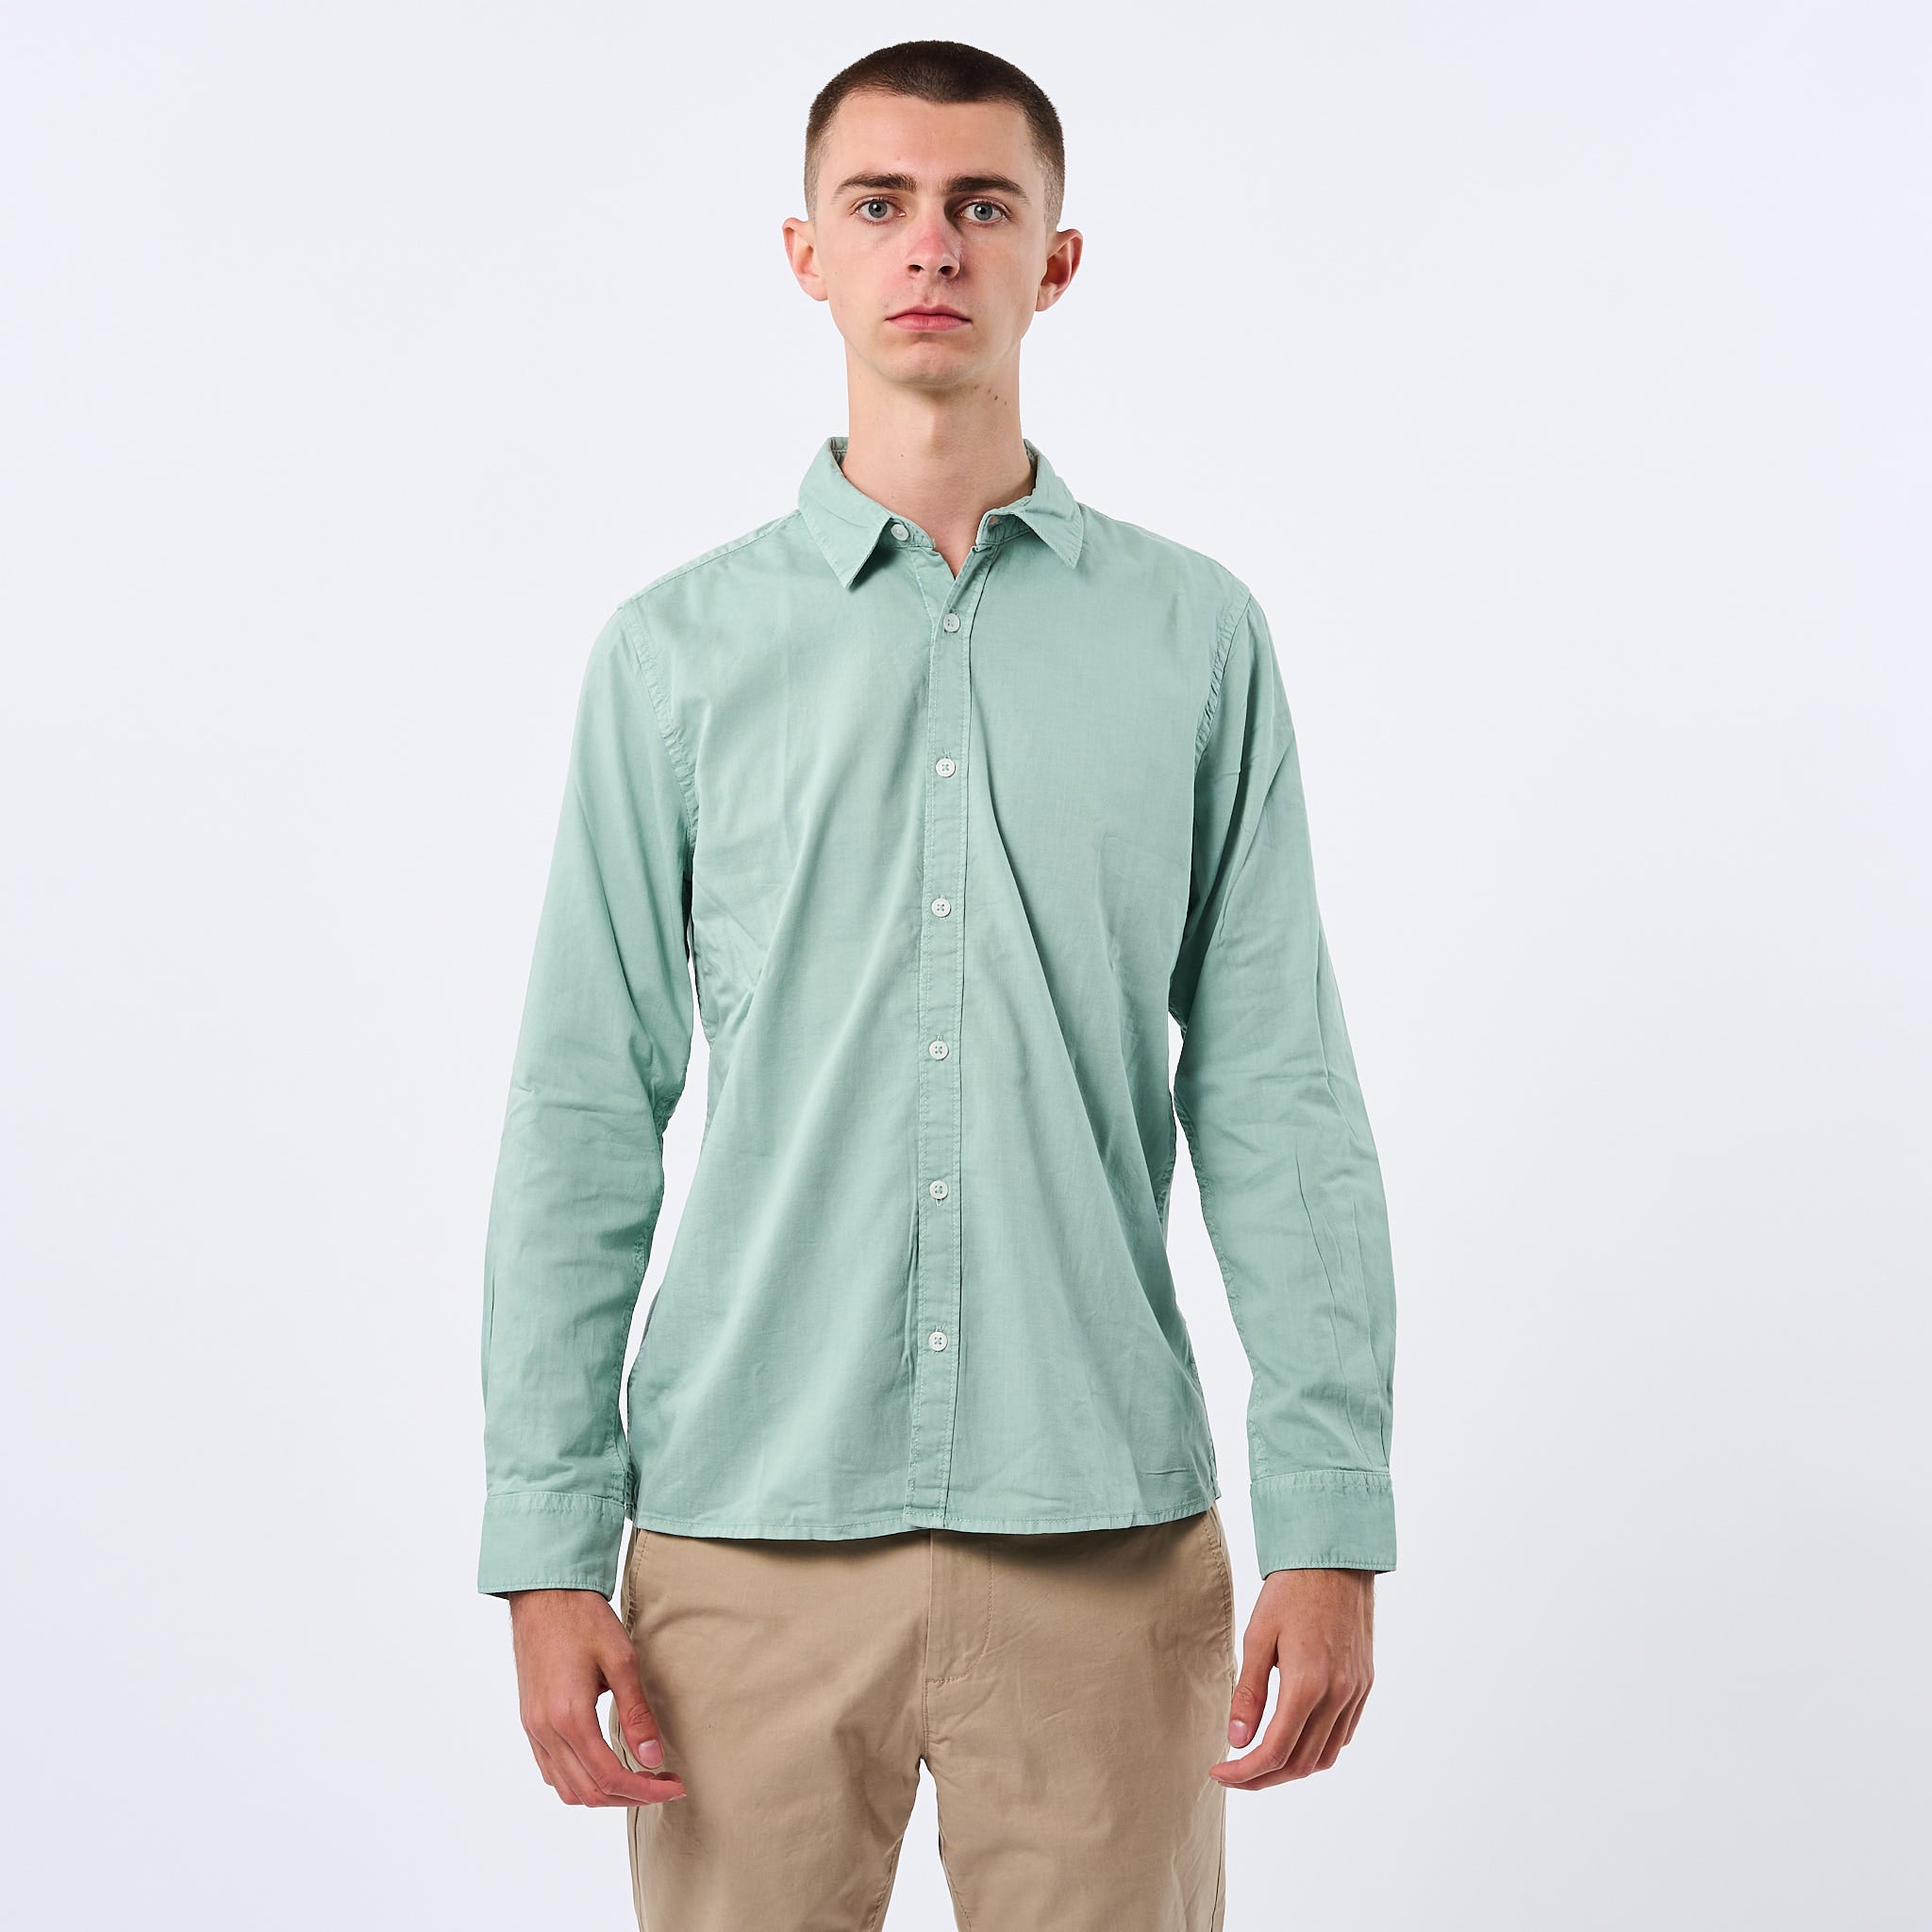 Omnitau Men's Varsity Organic Cotton Collared Shirt - Mid Green